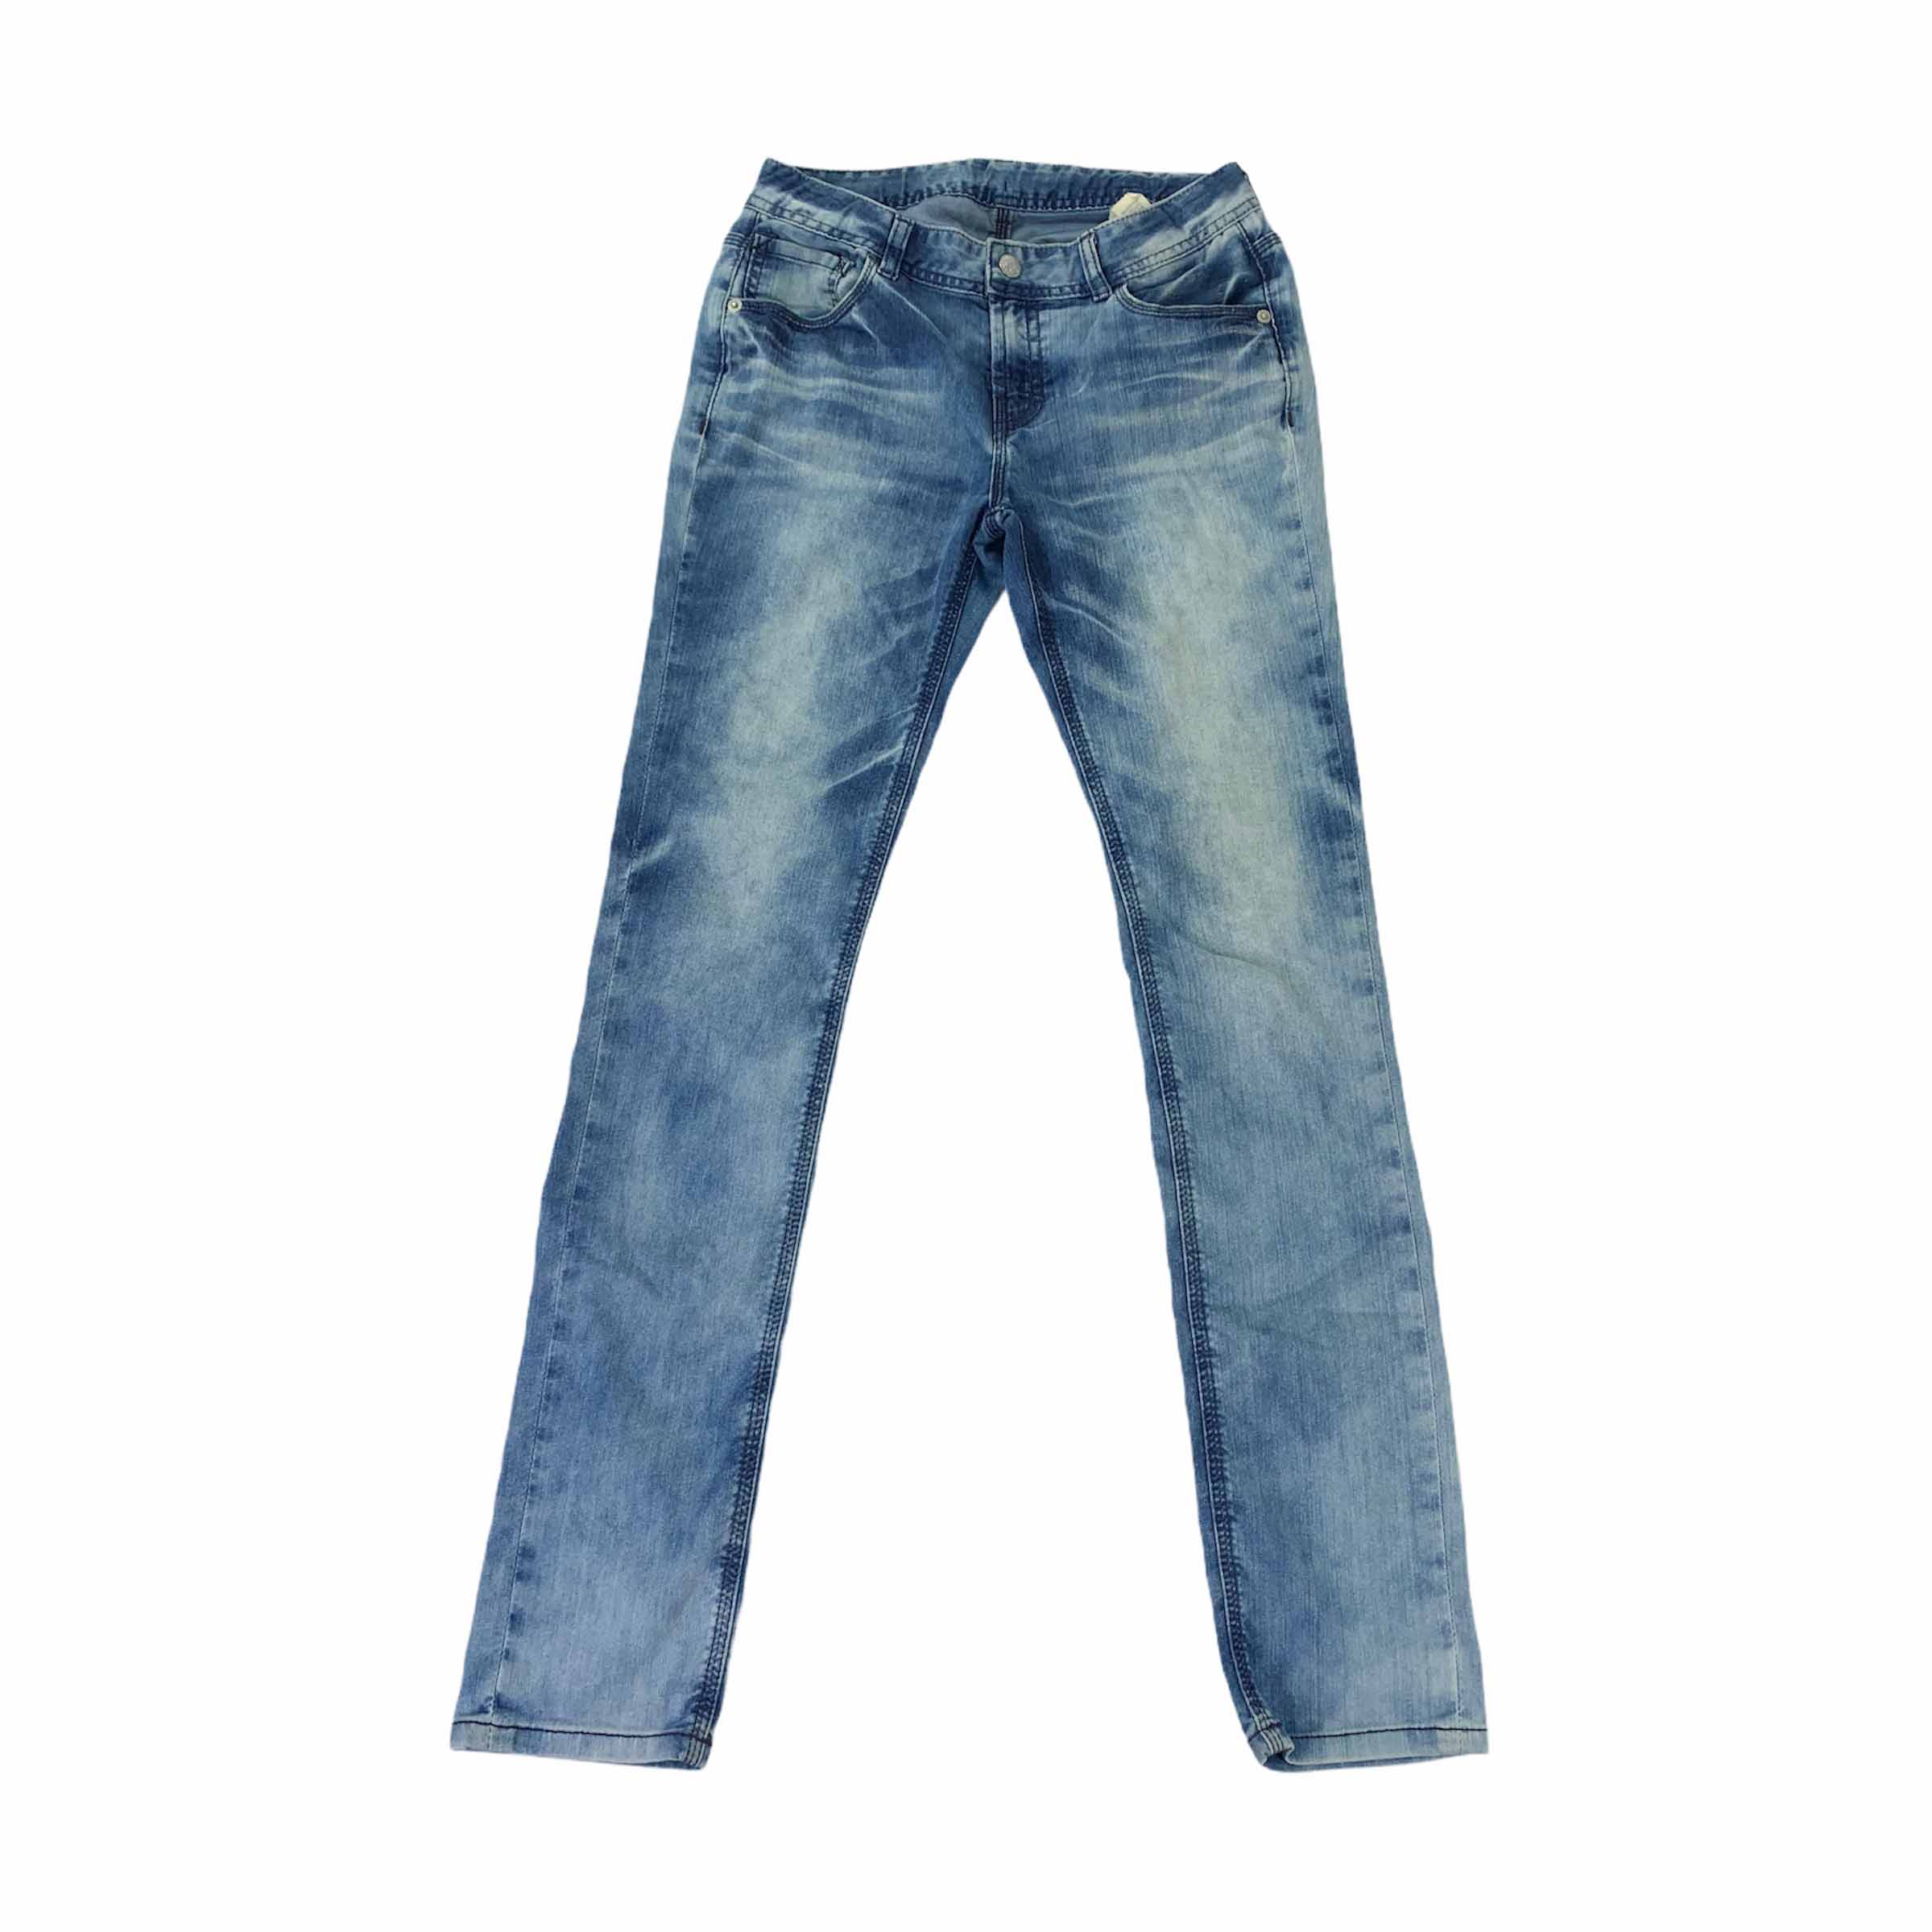 [Levis] Tie-dye ST Light Jeans - Size 165